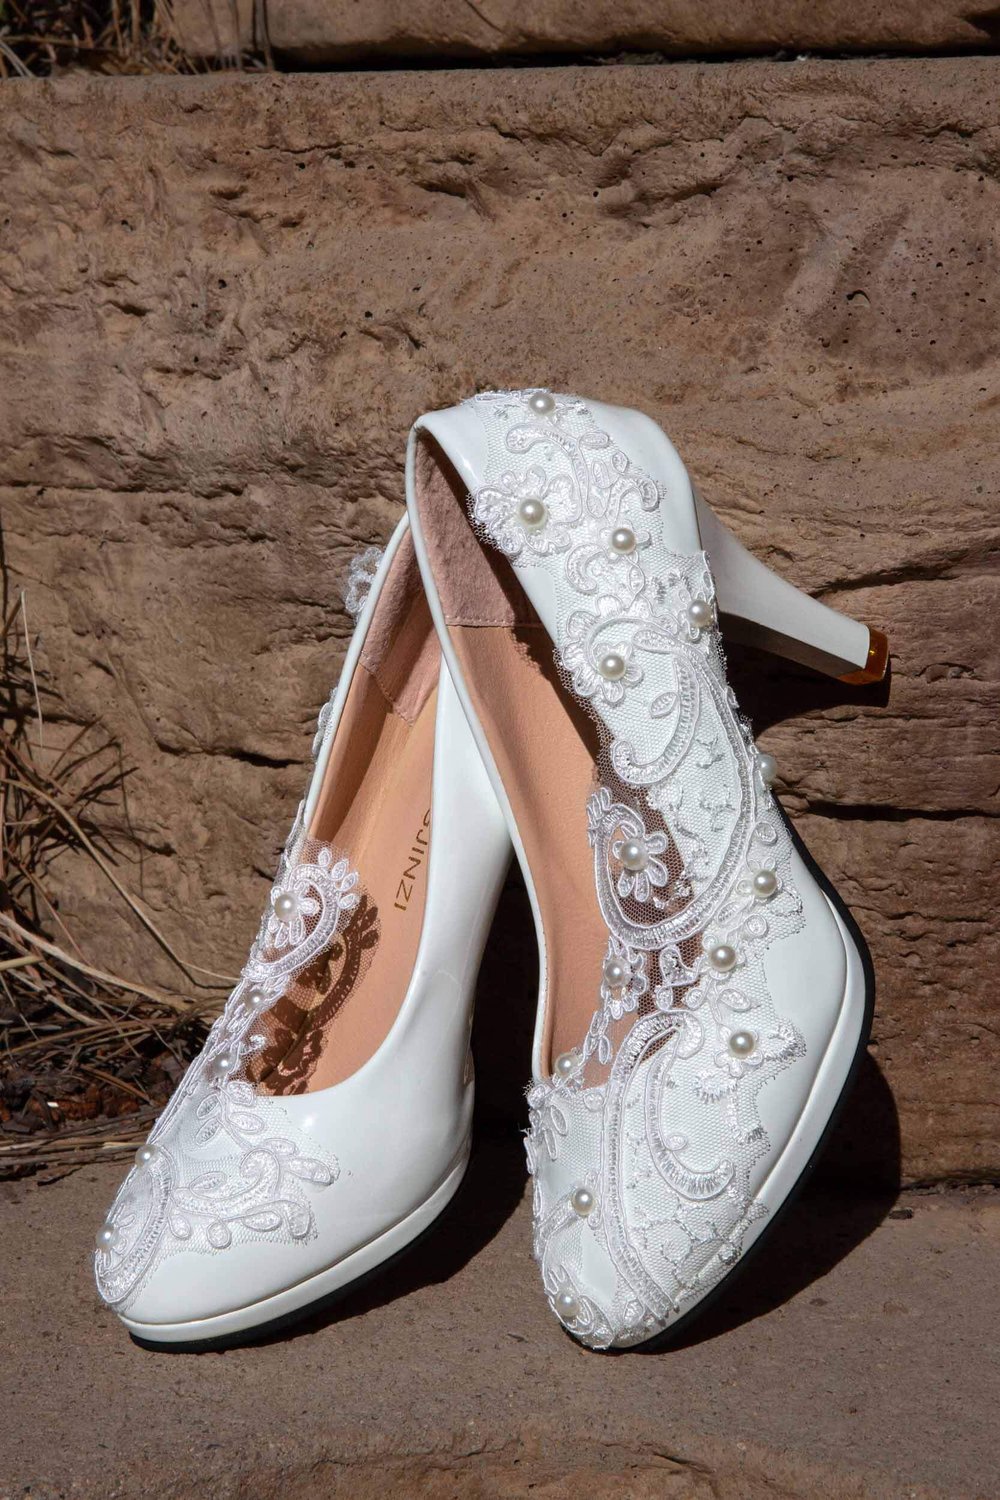 Bridal Shoes at della terra mountain chateau